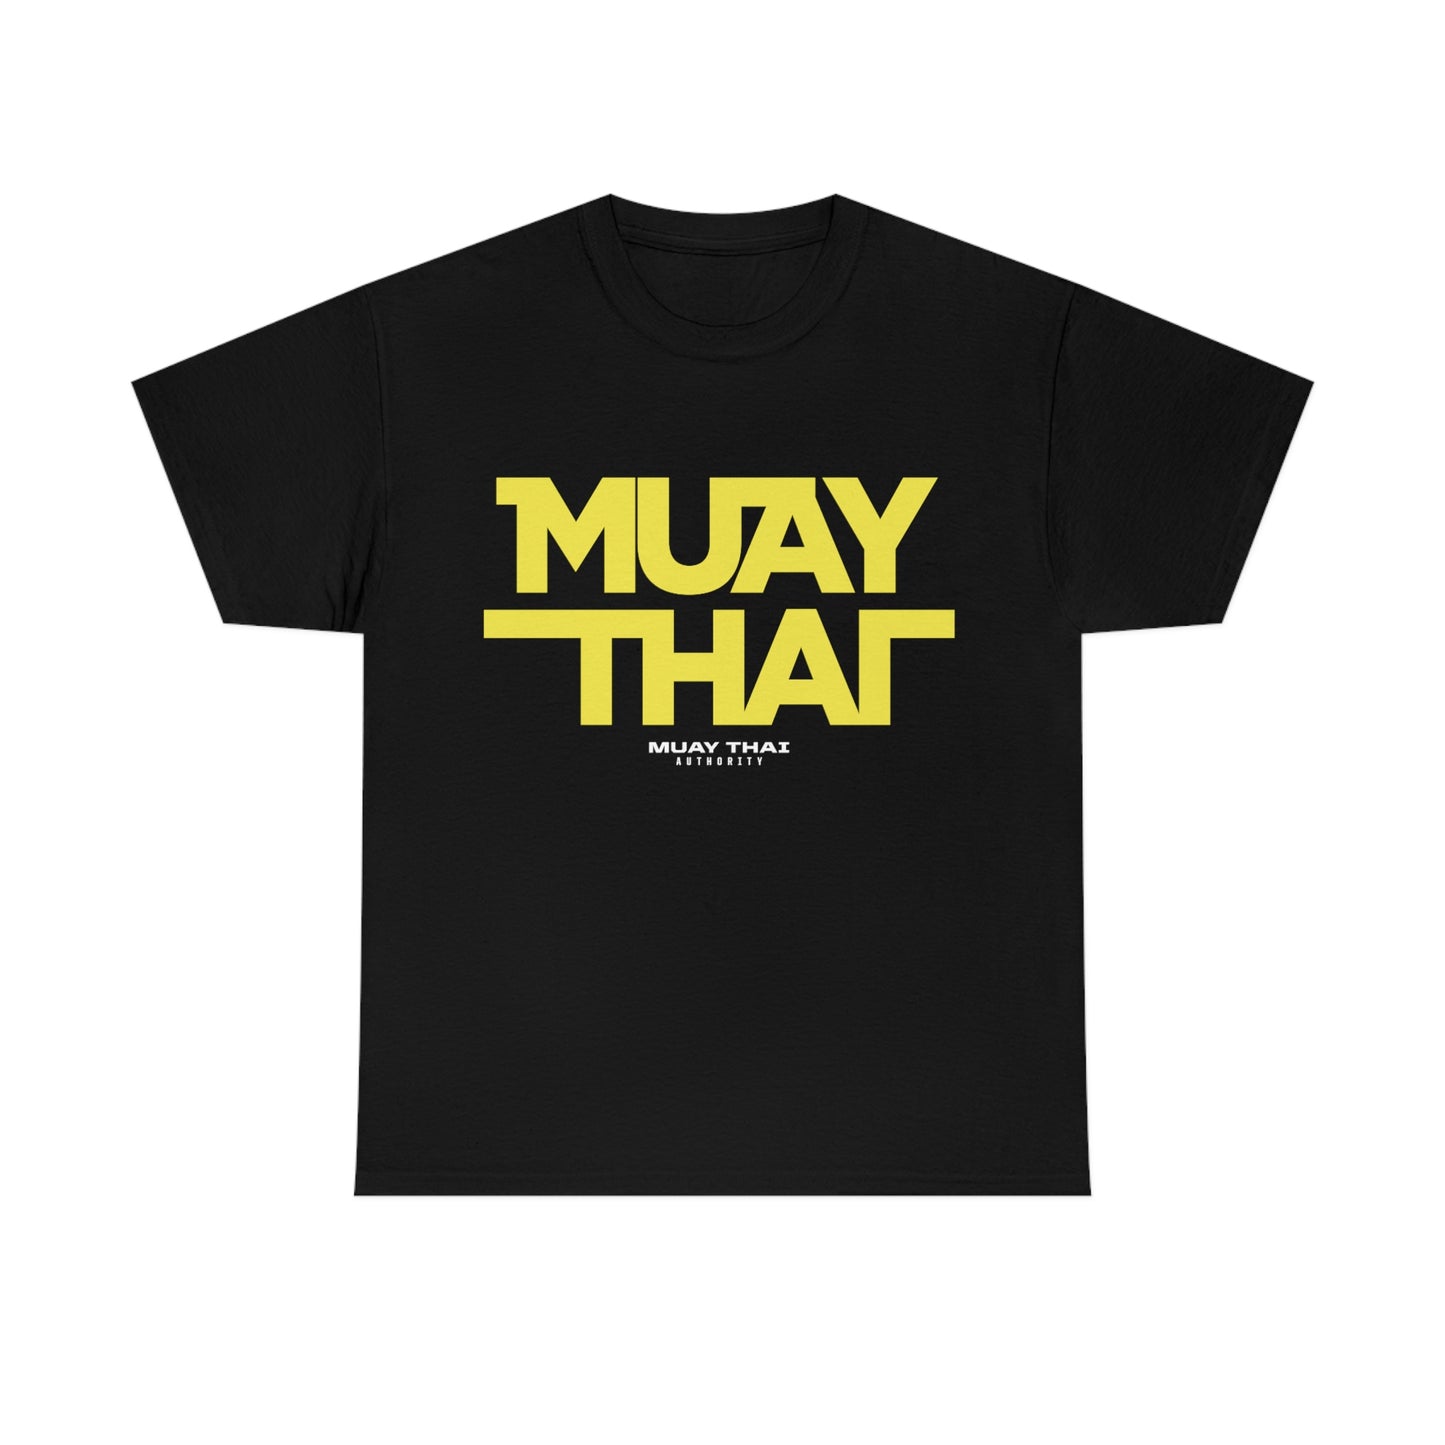 Muay Thai Wars